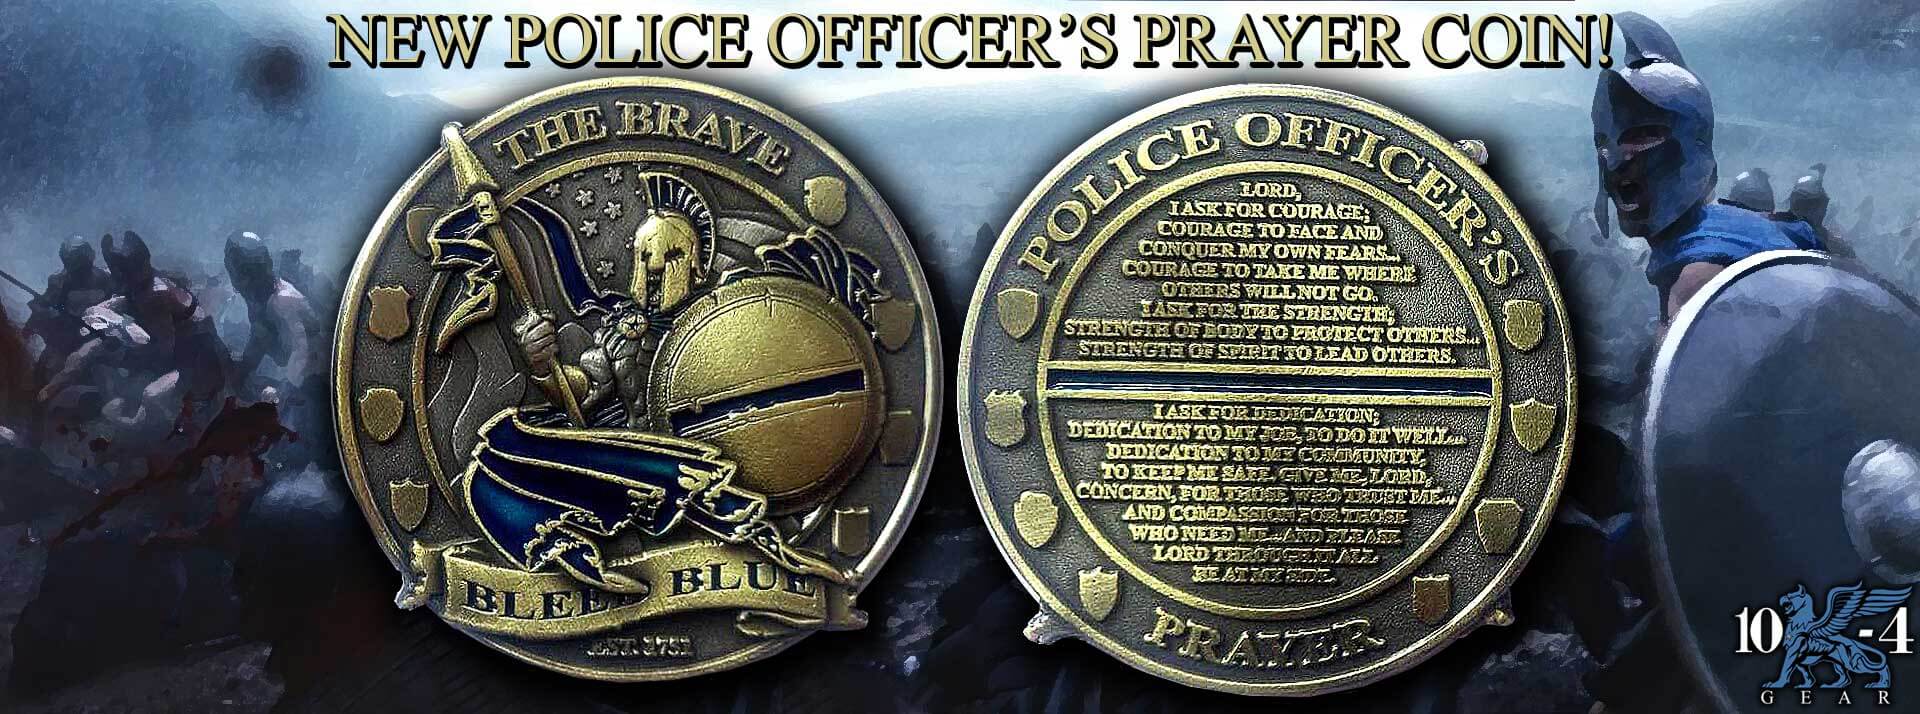 10-4-Gear_Header-Police-Prayer-Coin